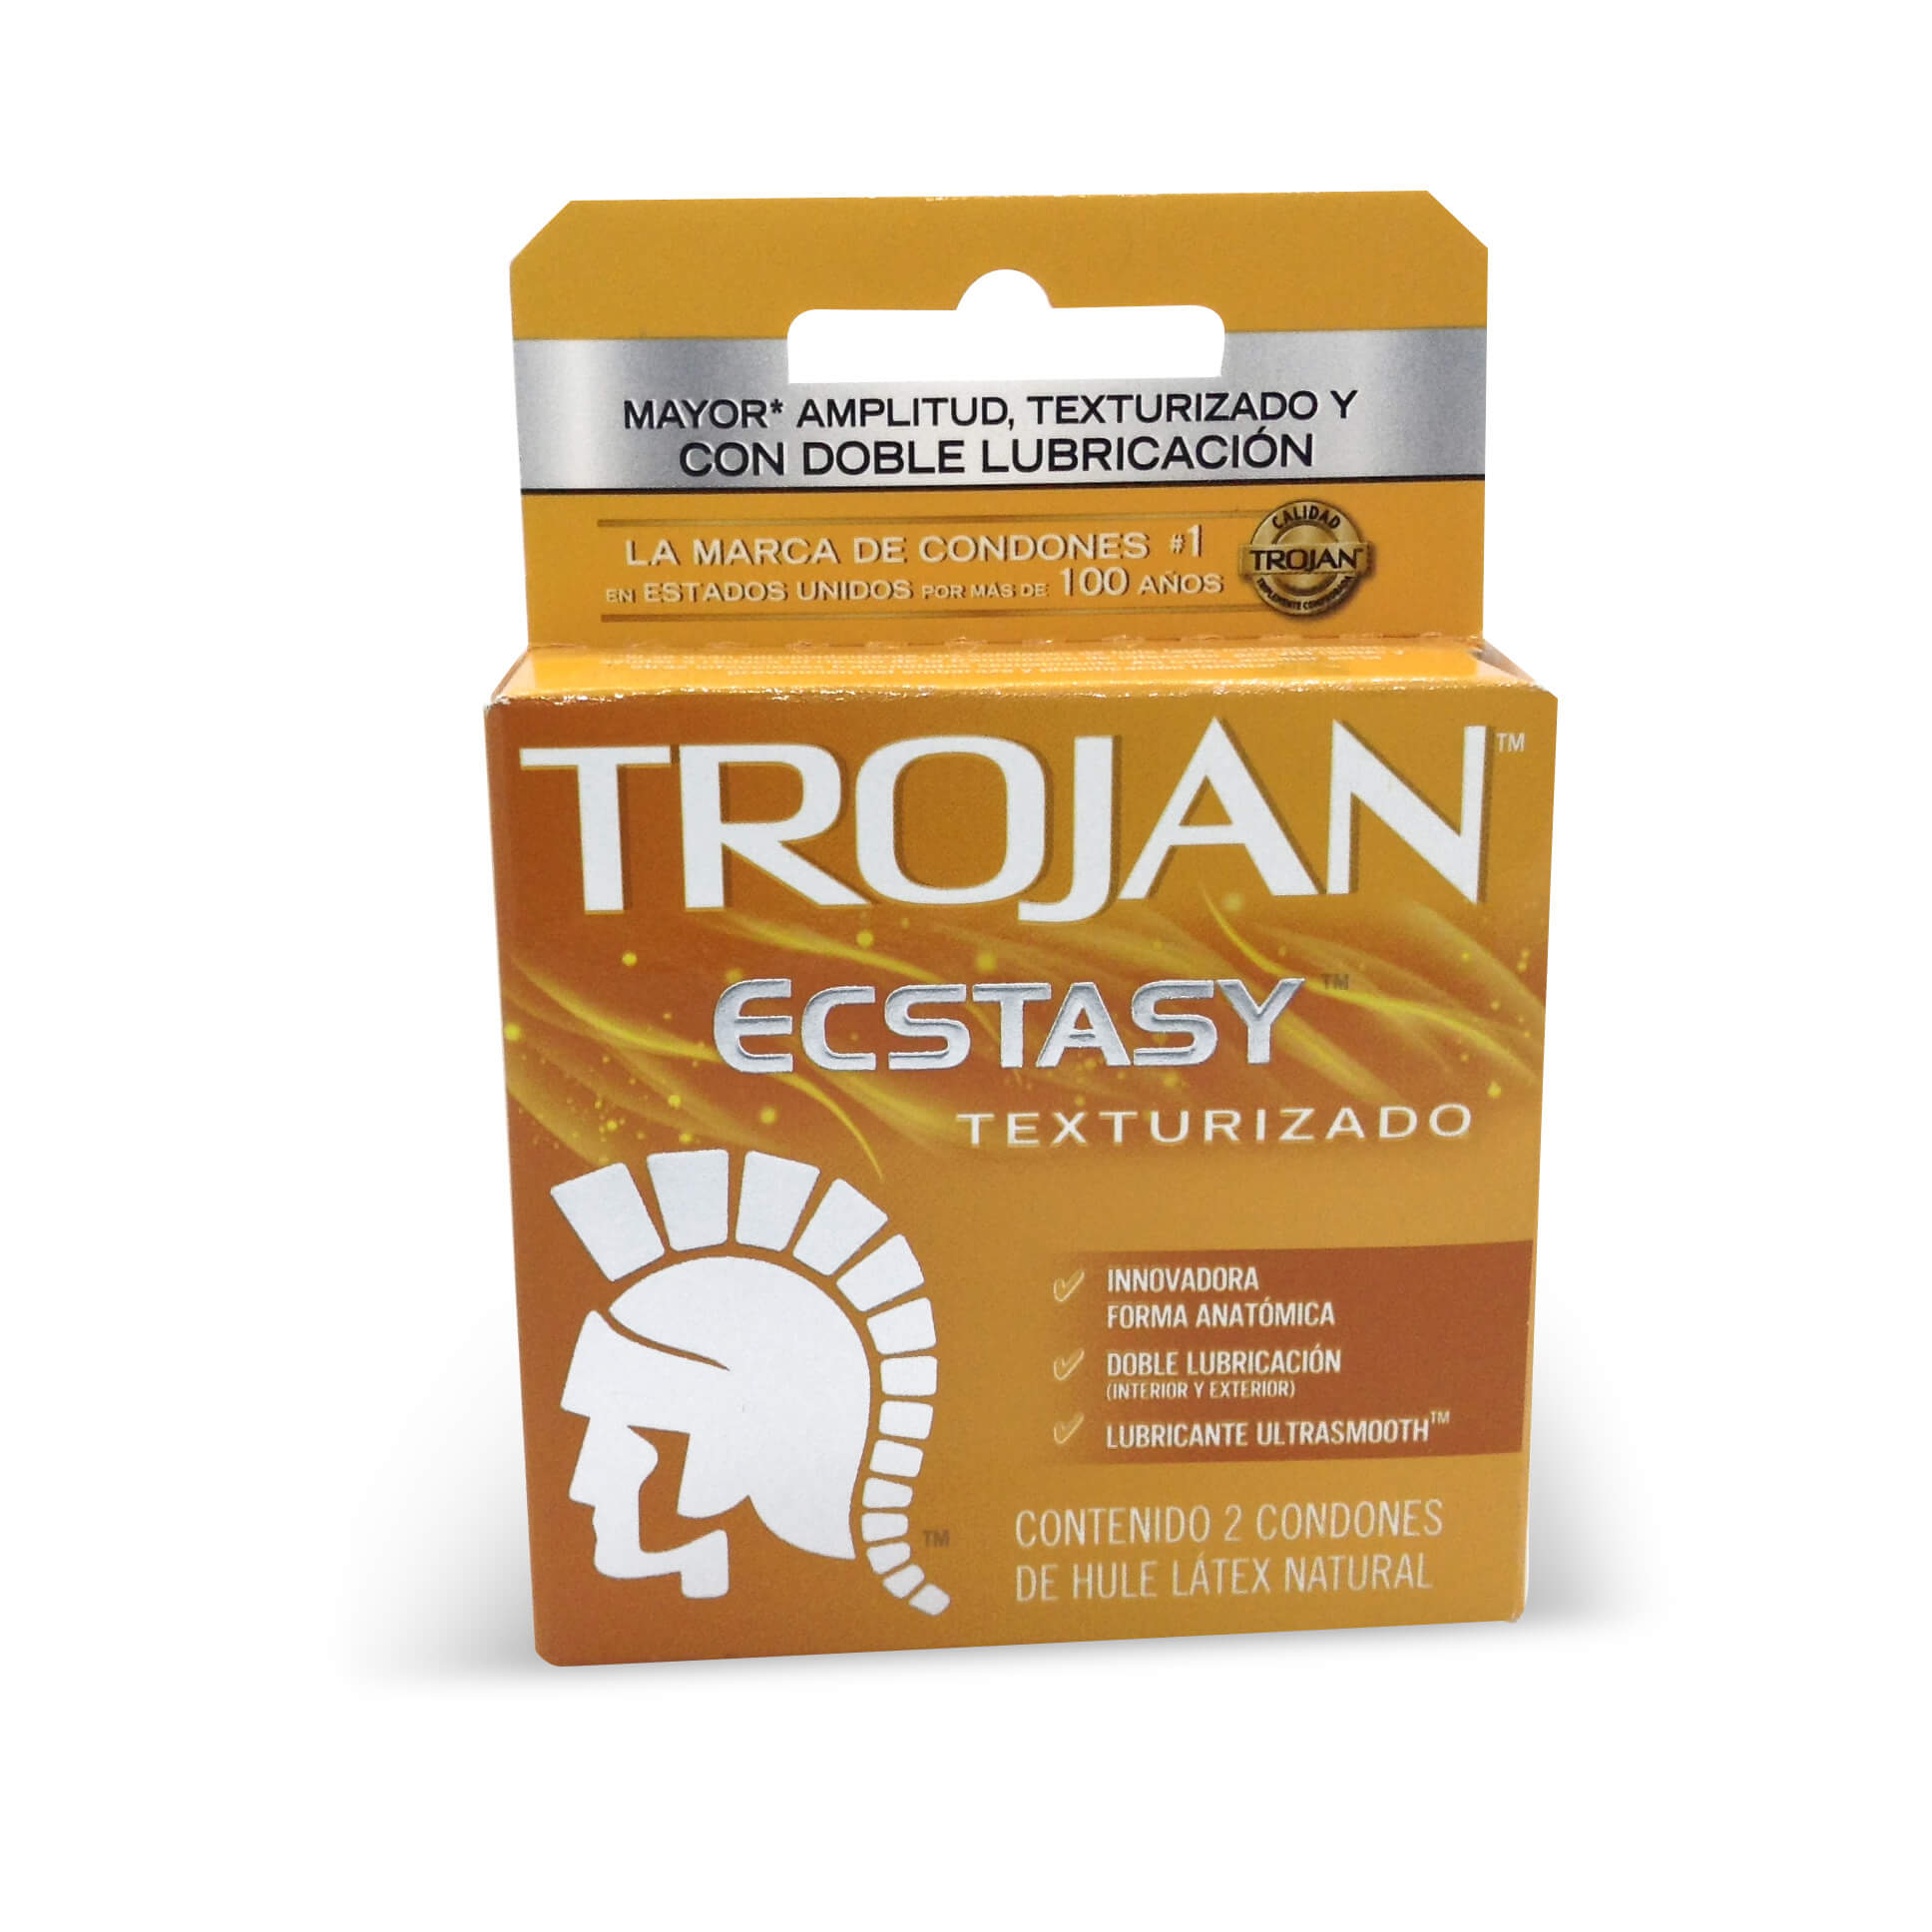 Trojan Ecstasy texturizado